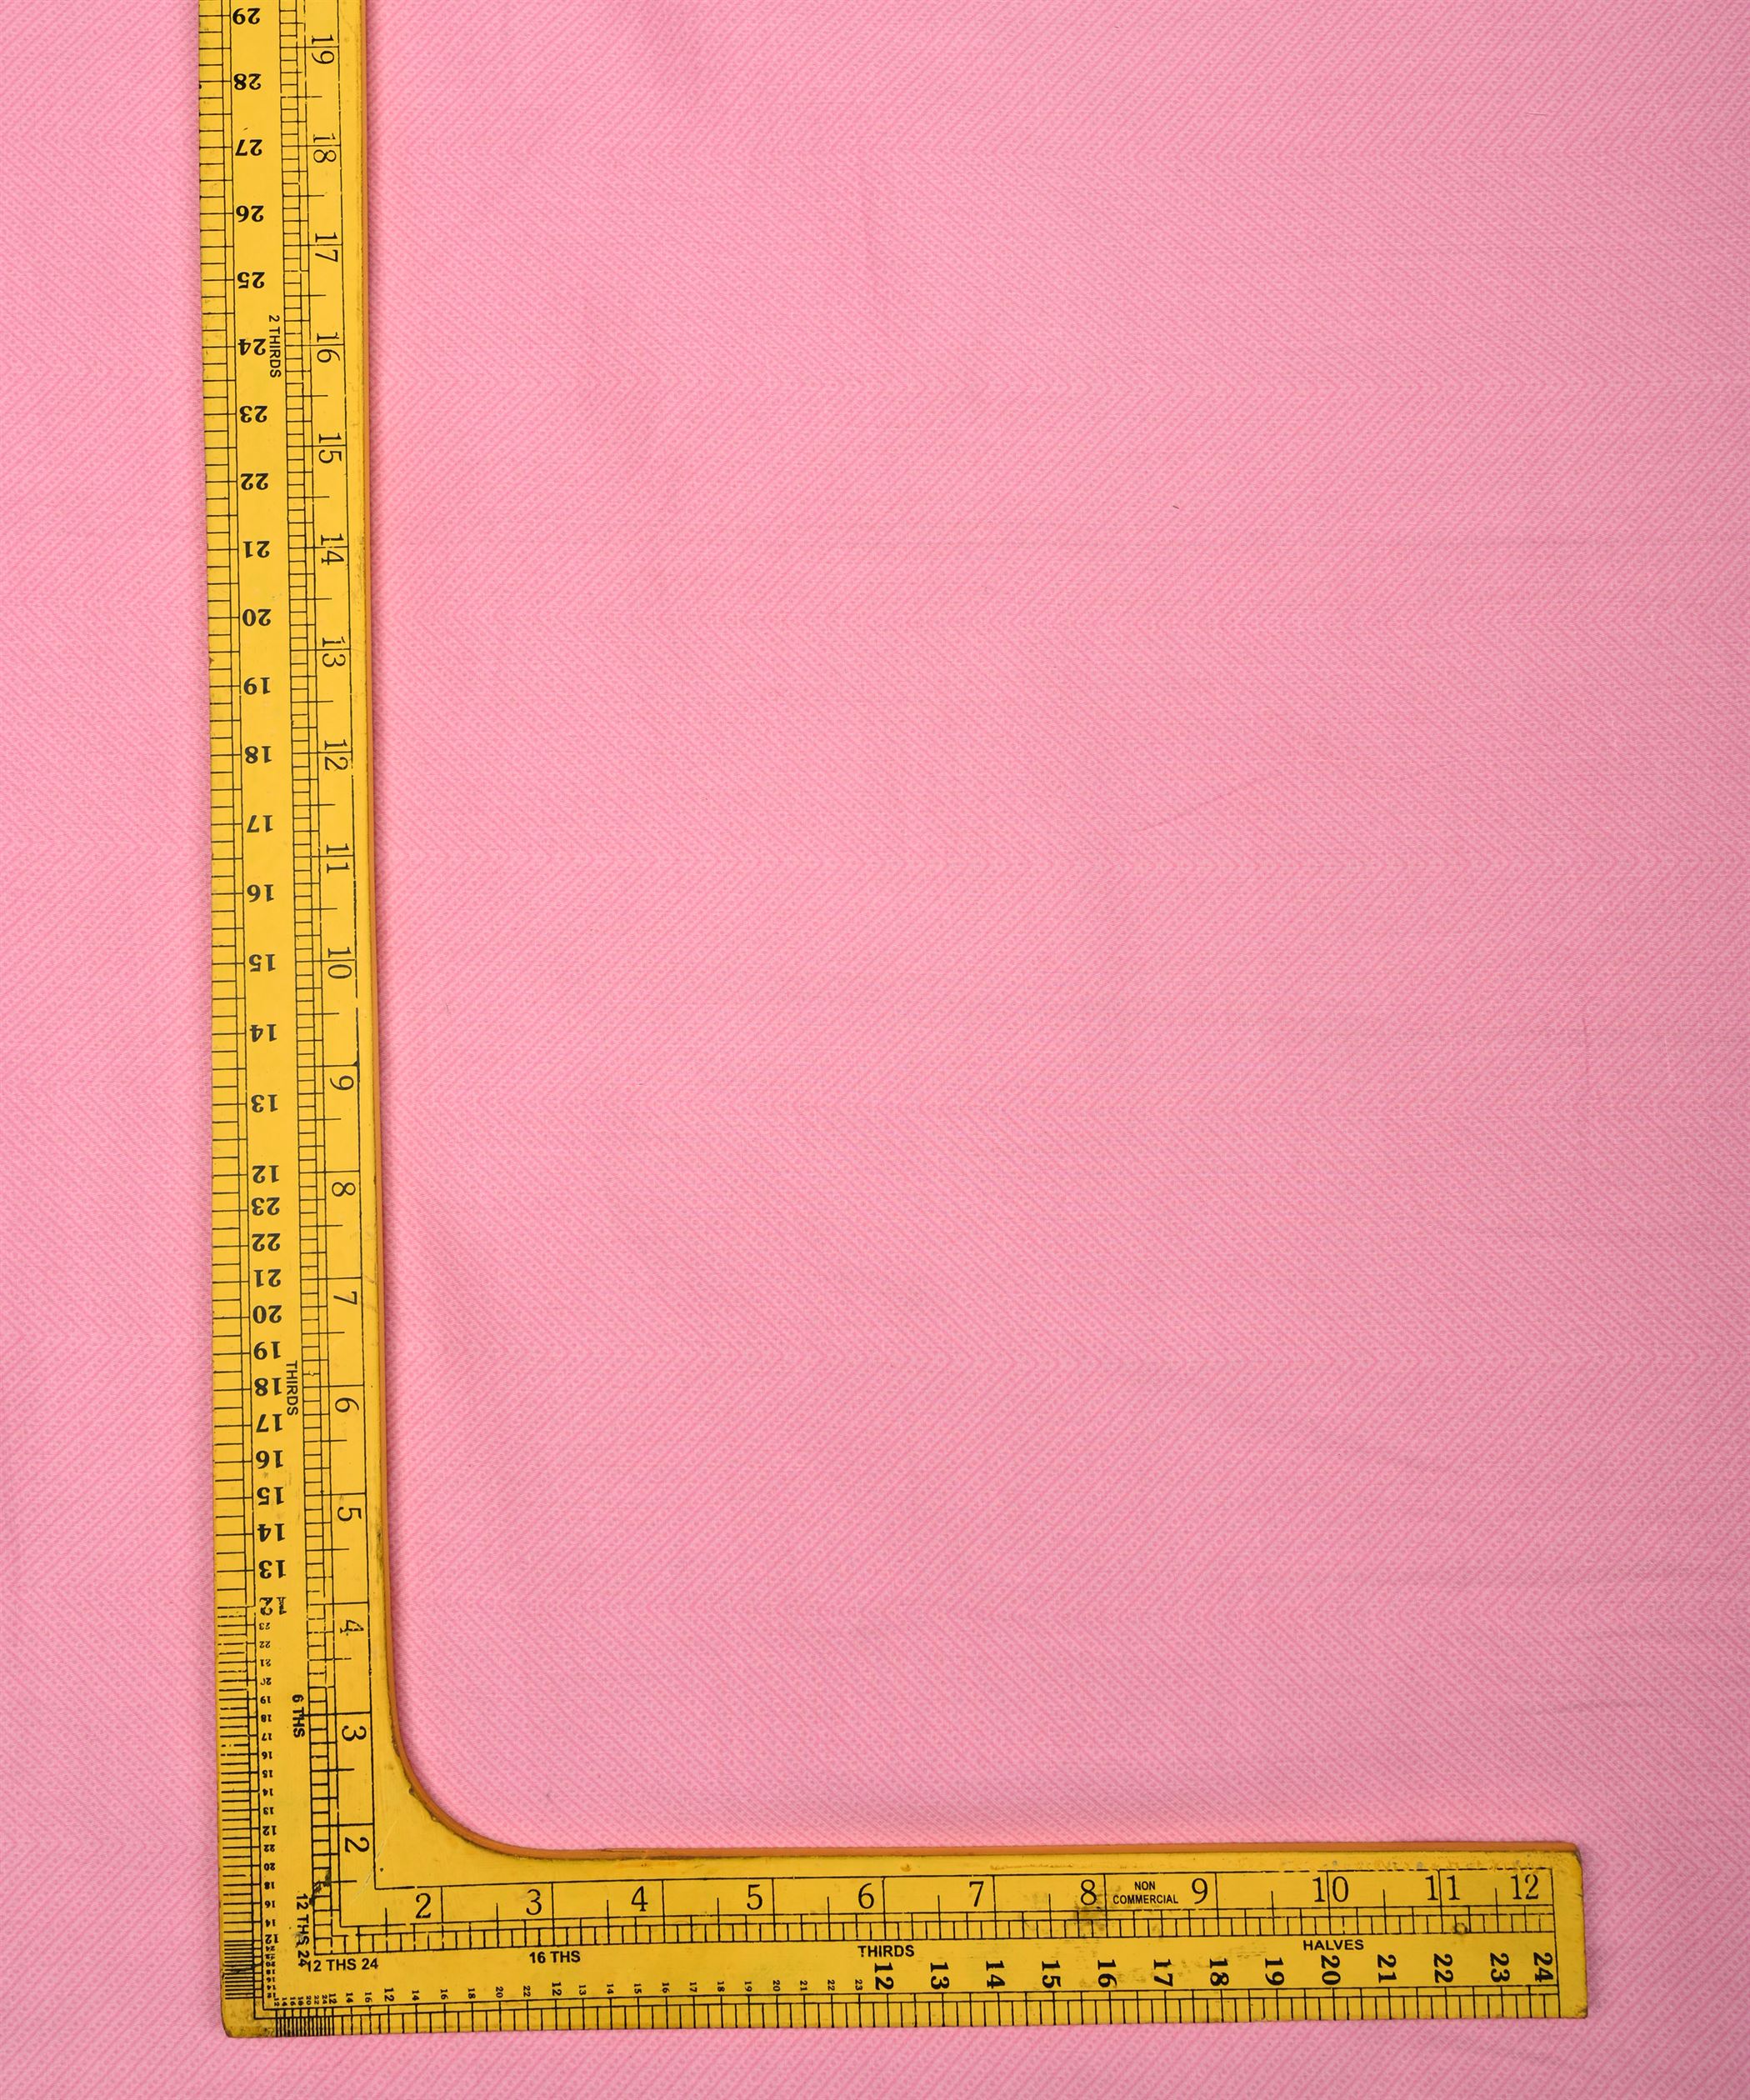 Pink Printed Cotton Satin fabric-3